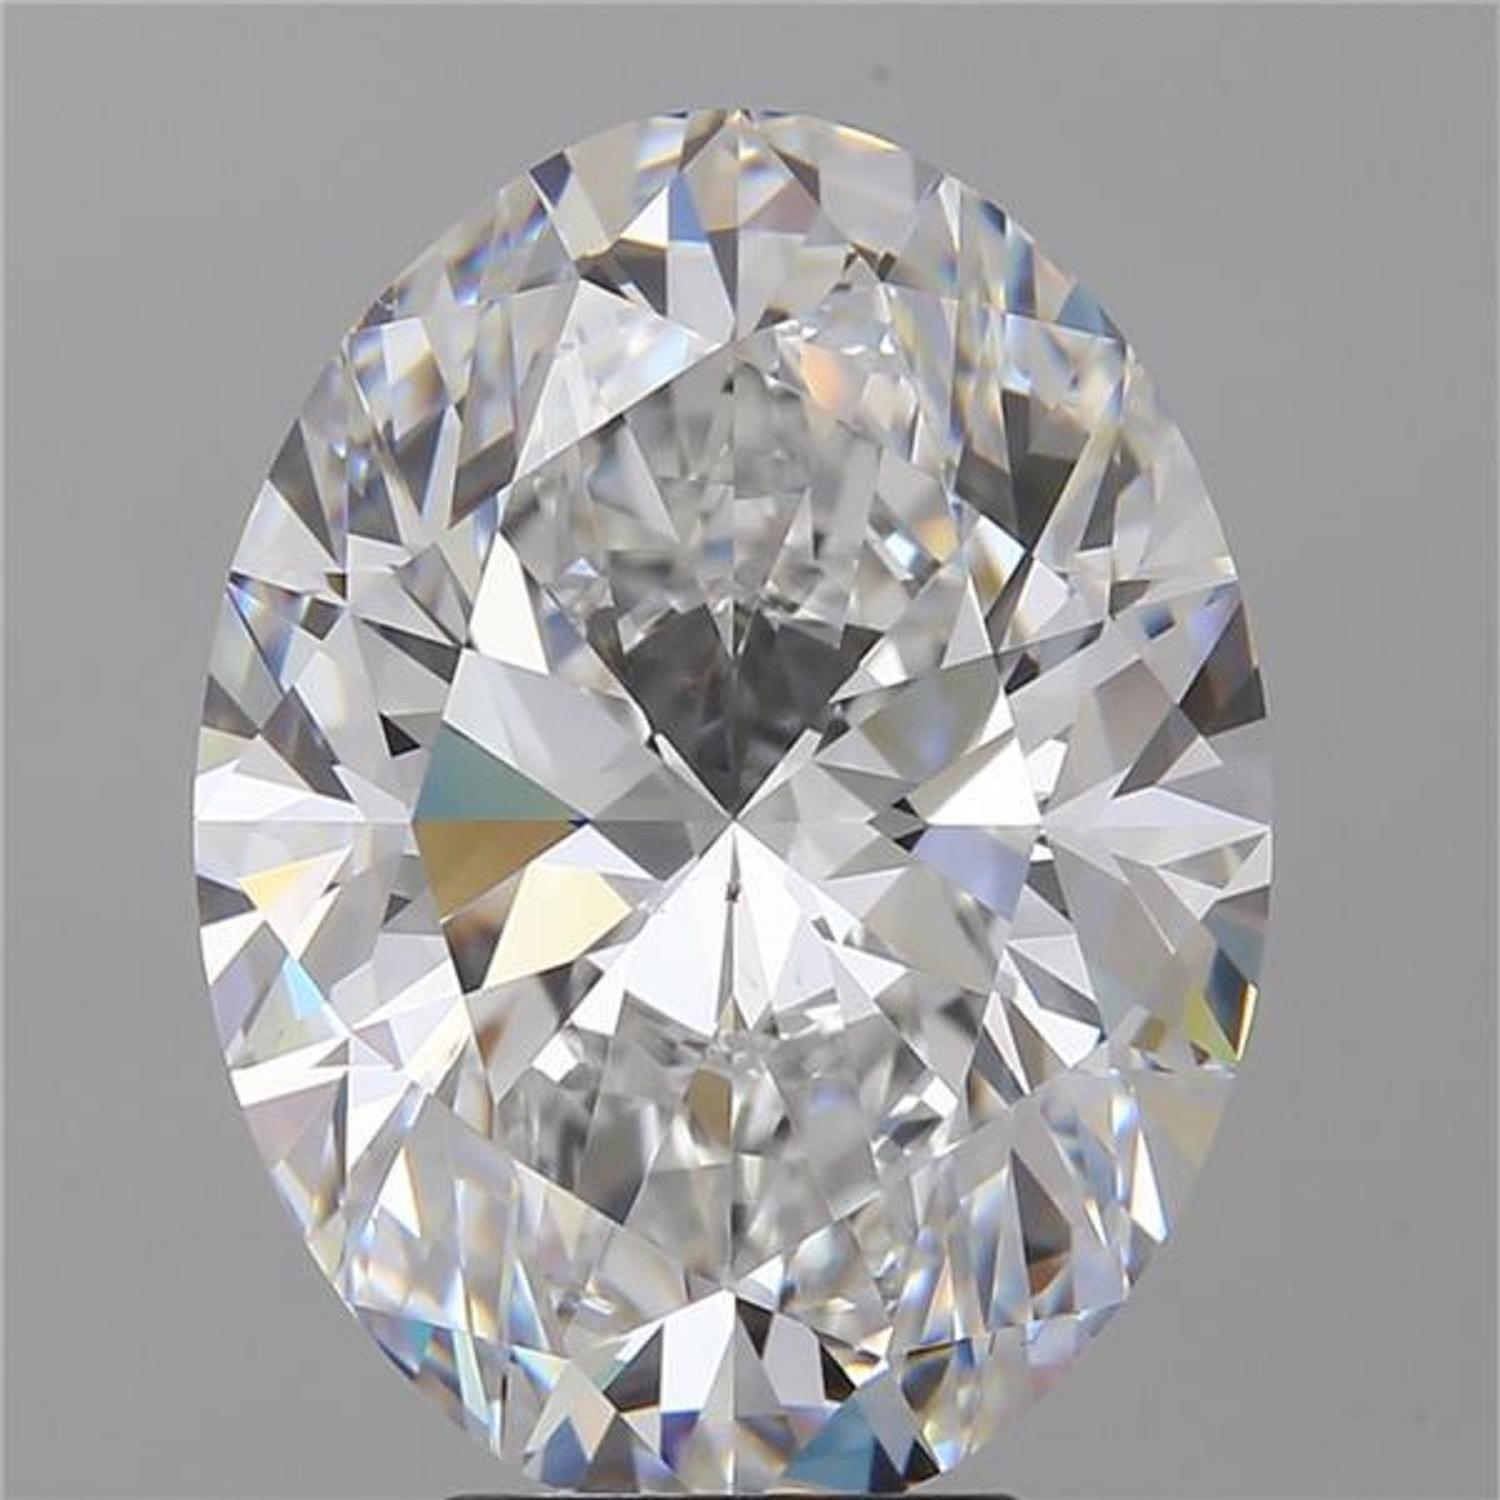 5.25 carat diamond